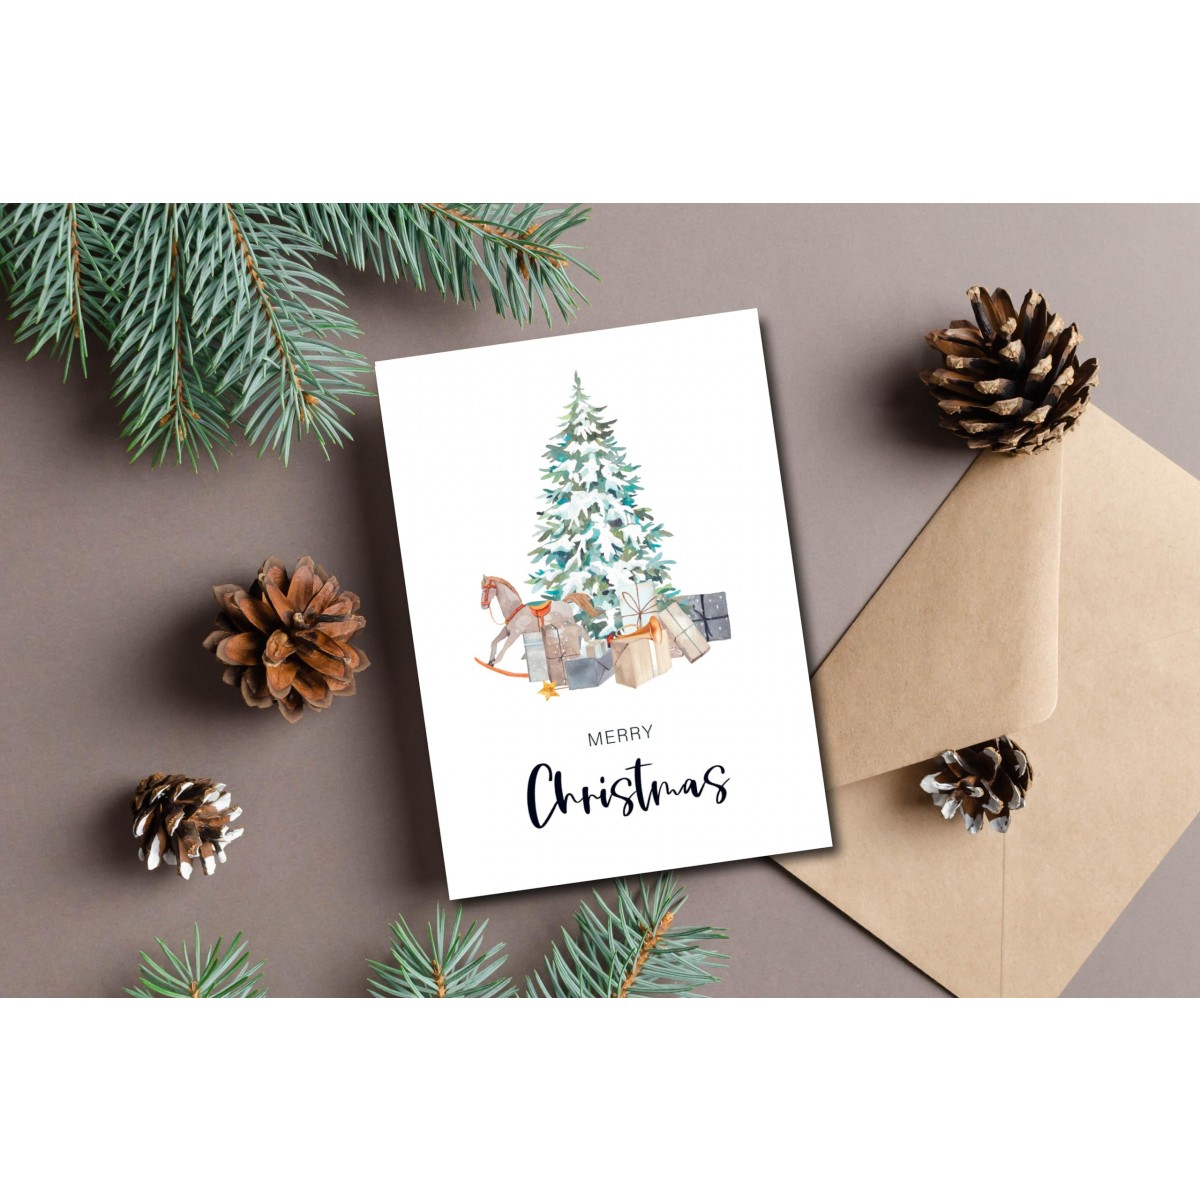 The Life Barn 10x Weihnachtskarten Set Merry Christmas | Weihnachten Karten mit Umschlag | Weihnachtspost